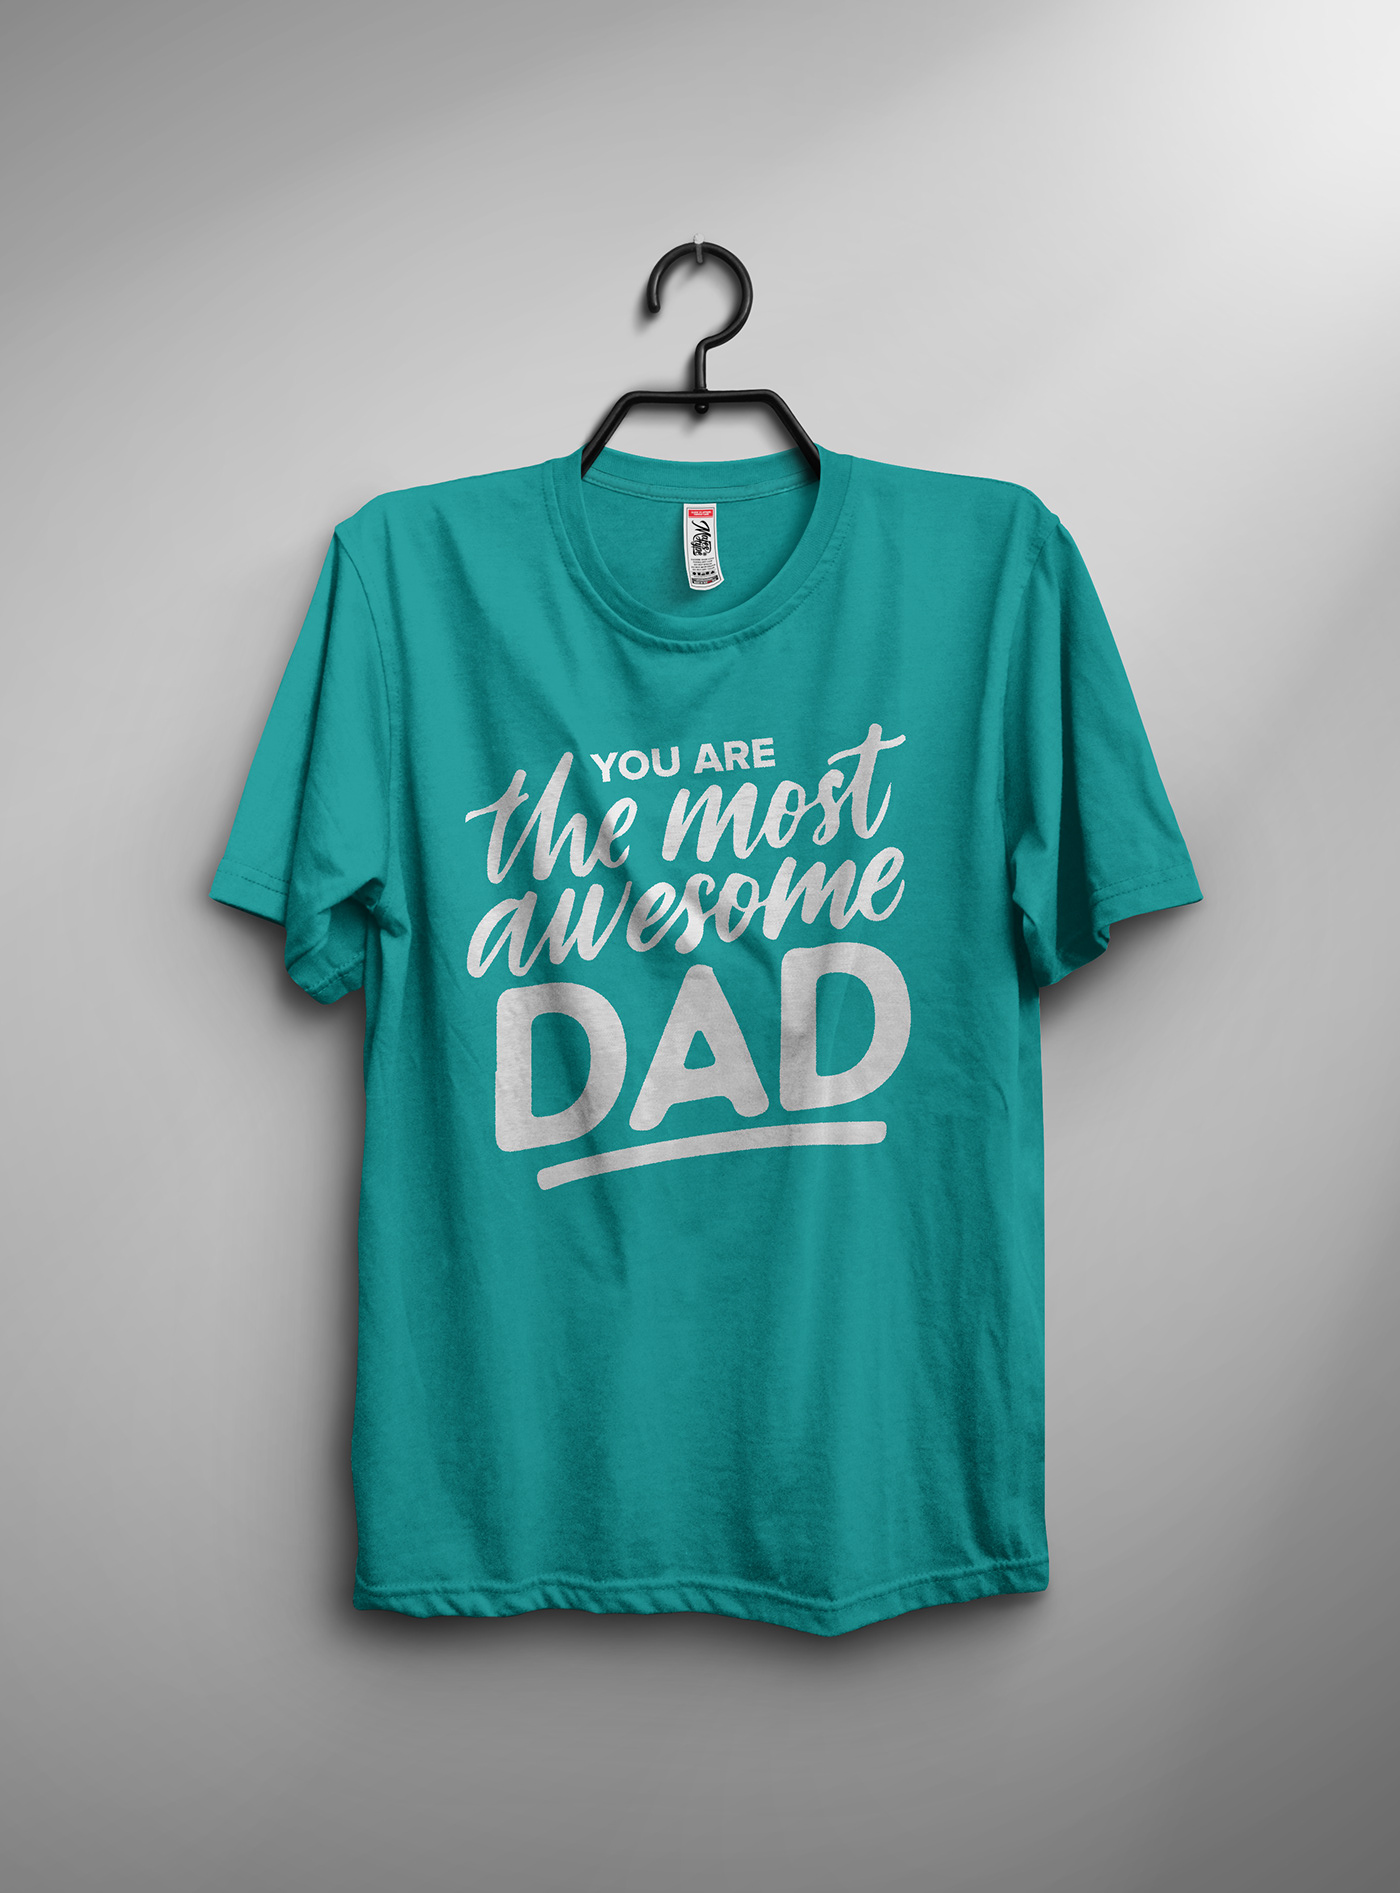 designer father fatherday graphicdesigner tshirt